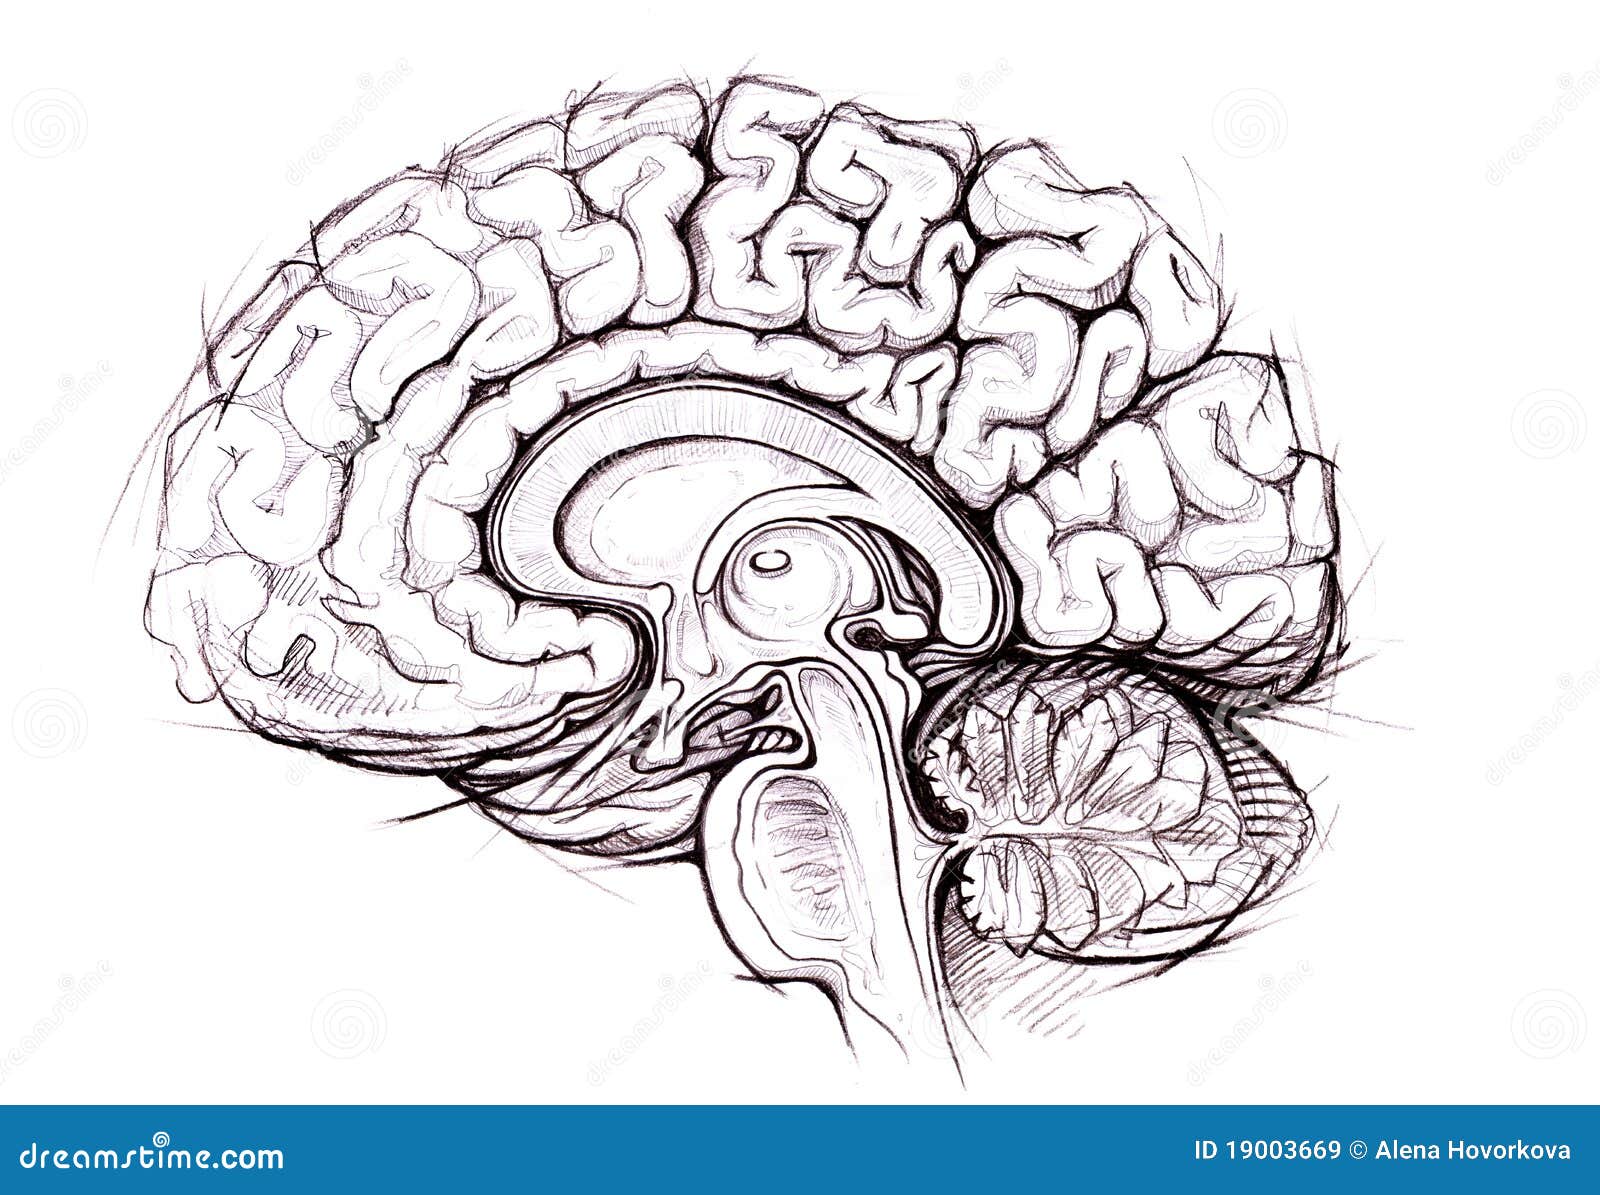 Pencil Skethy Study Of Human Brain Stock Illustration ...